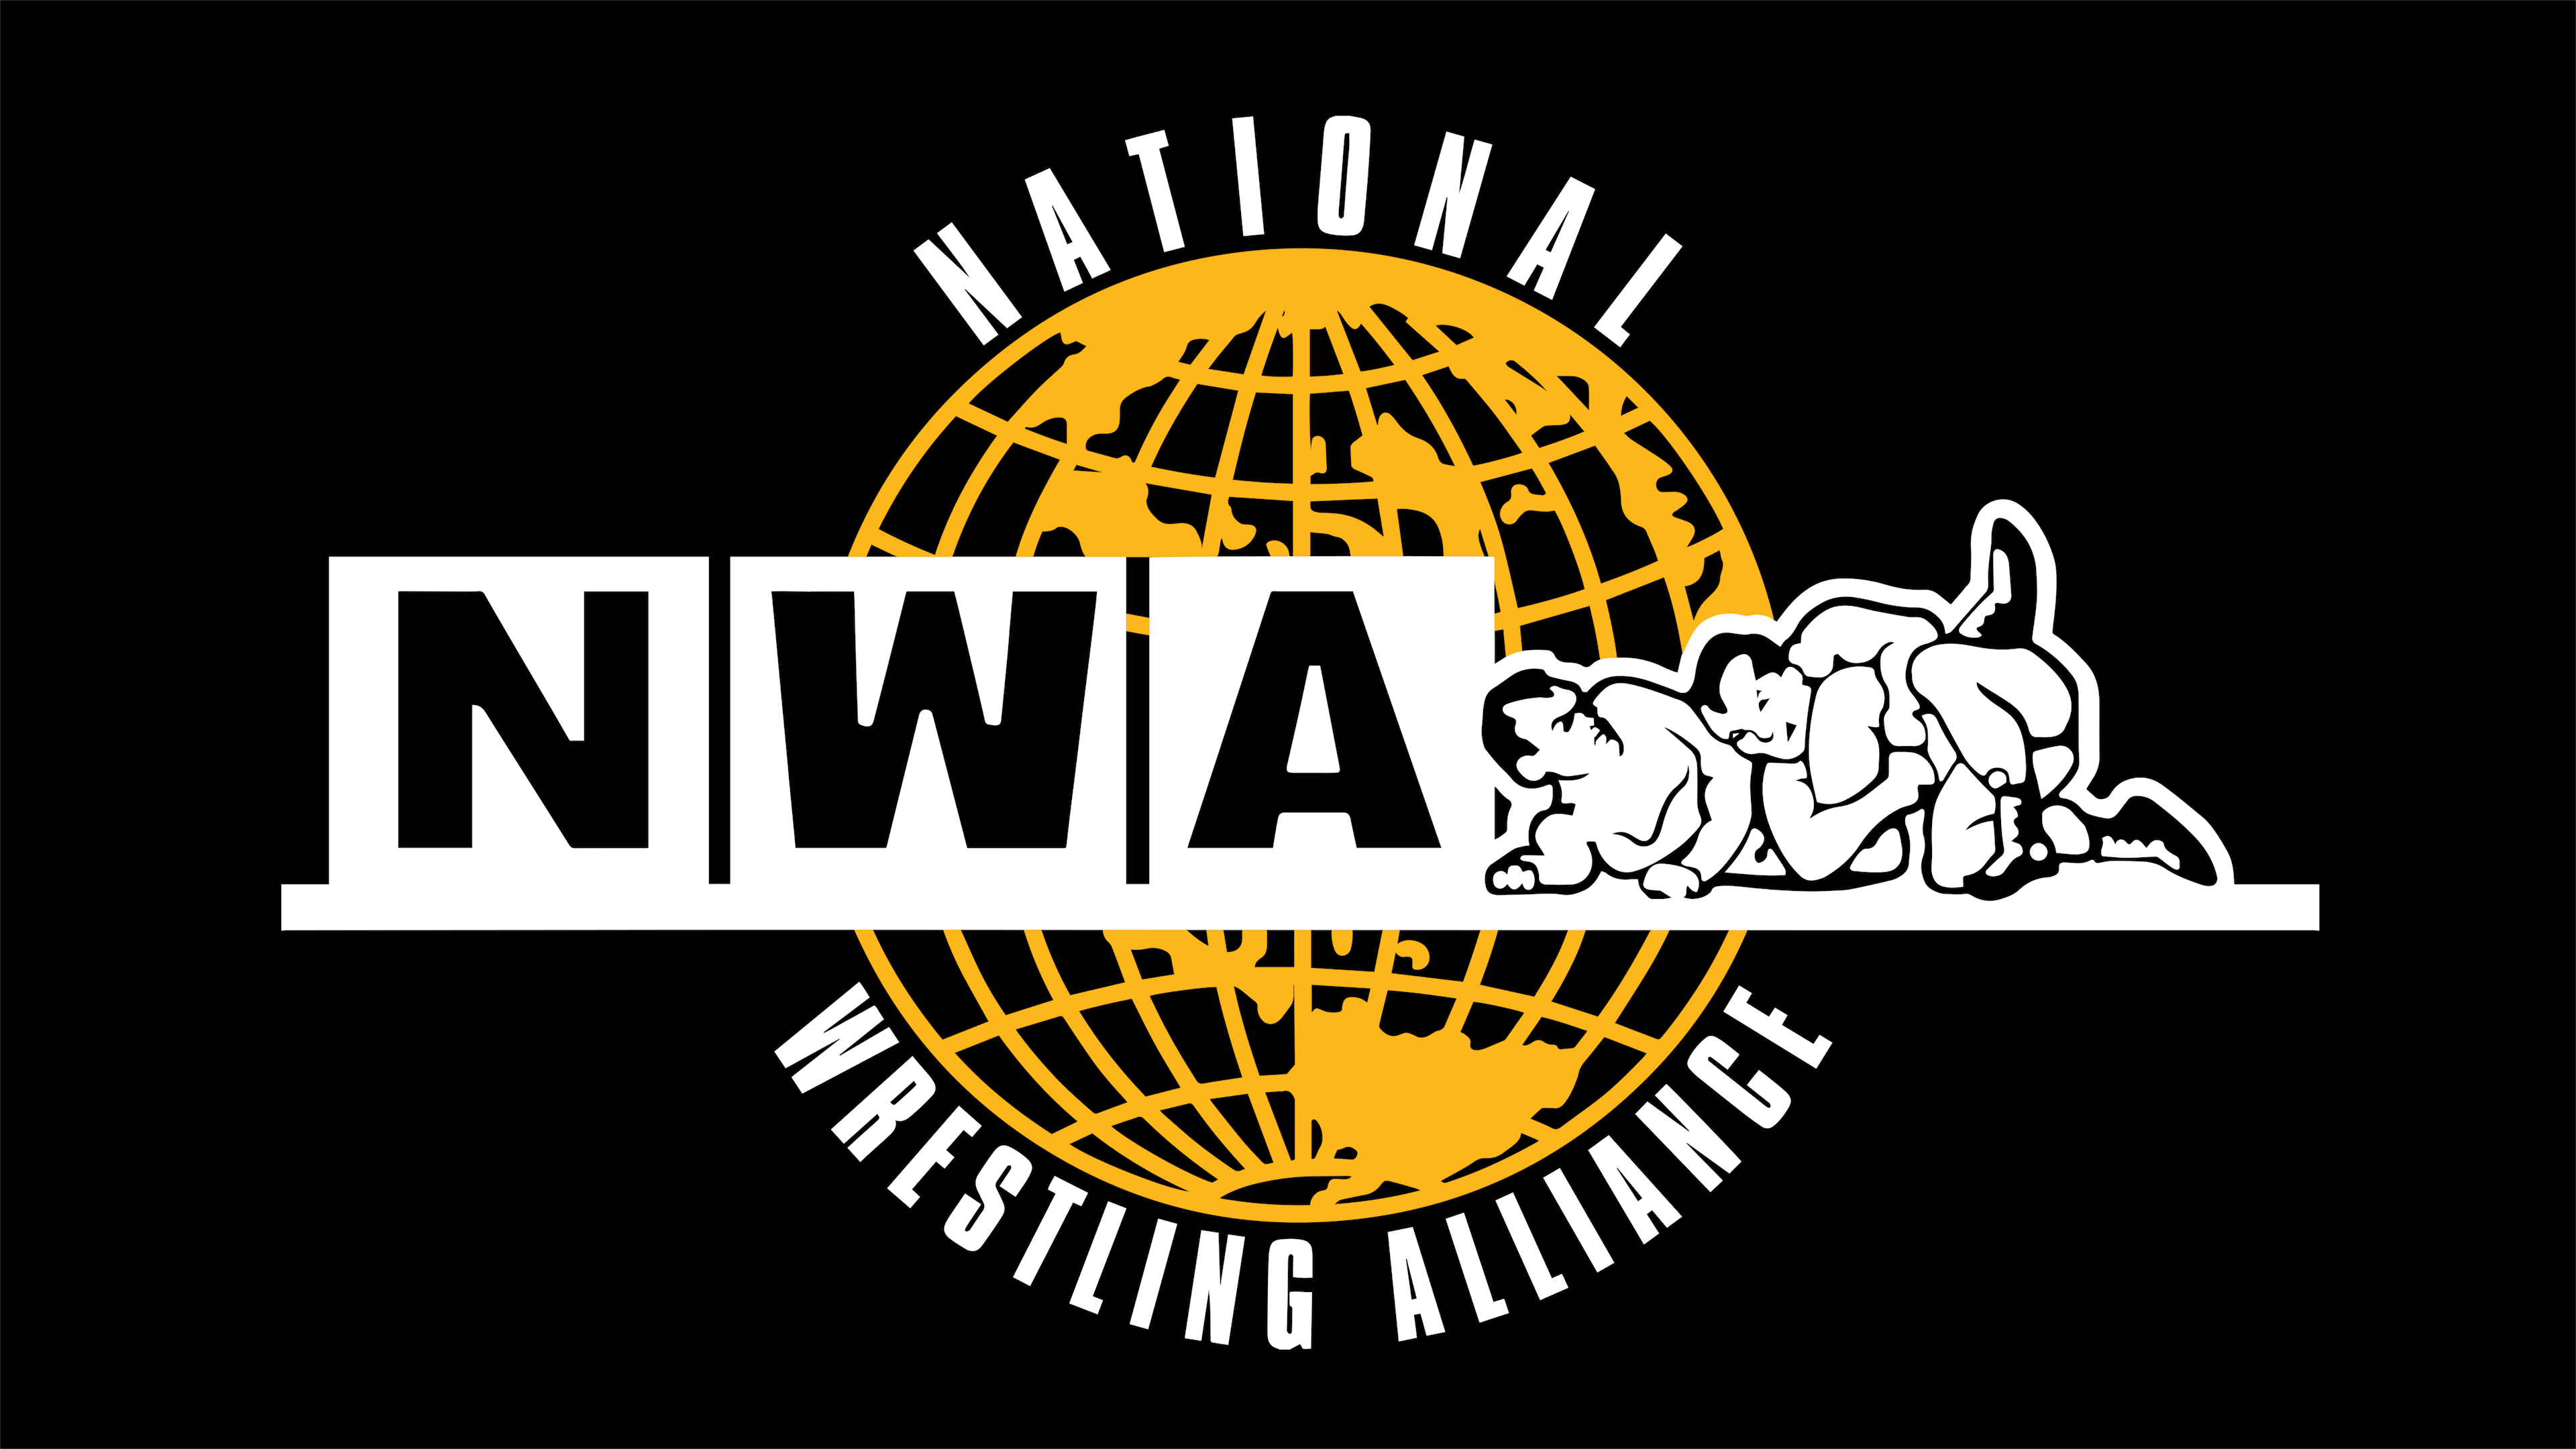 Watch this week’s episode of NWA USA